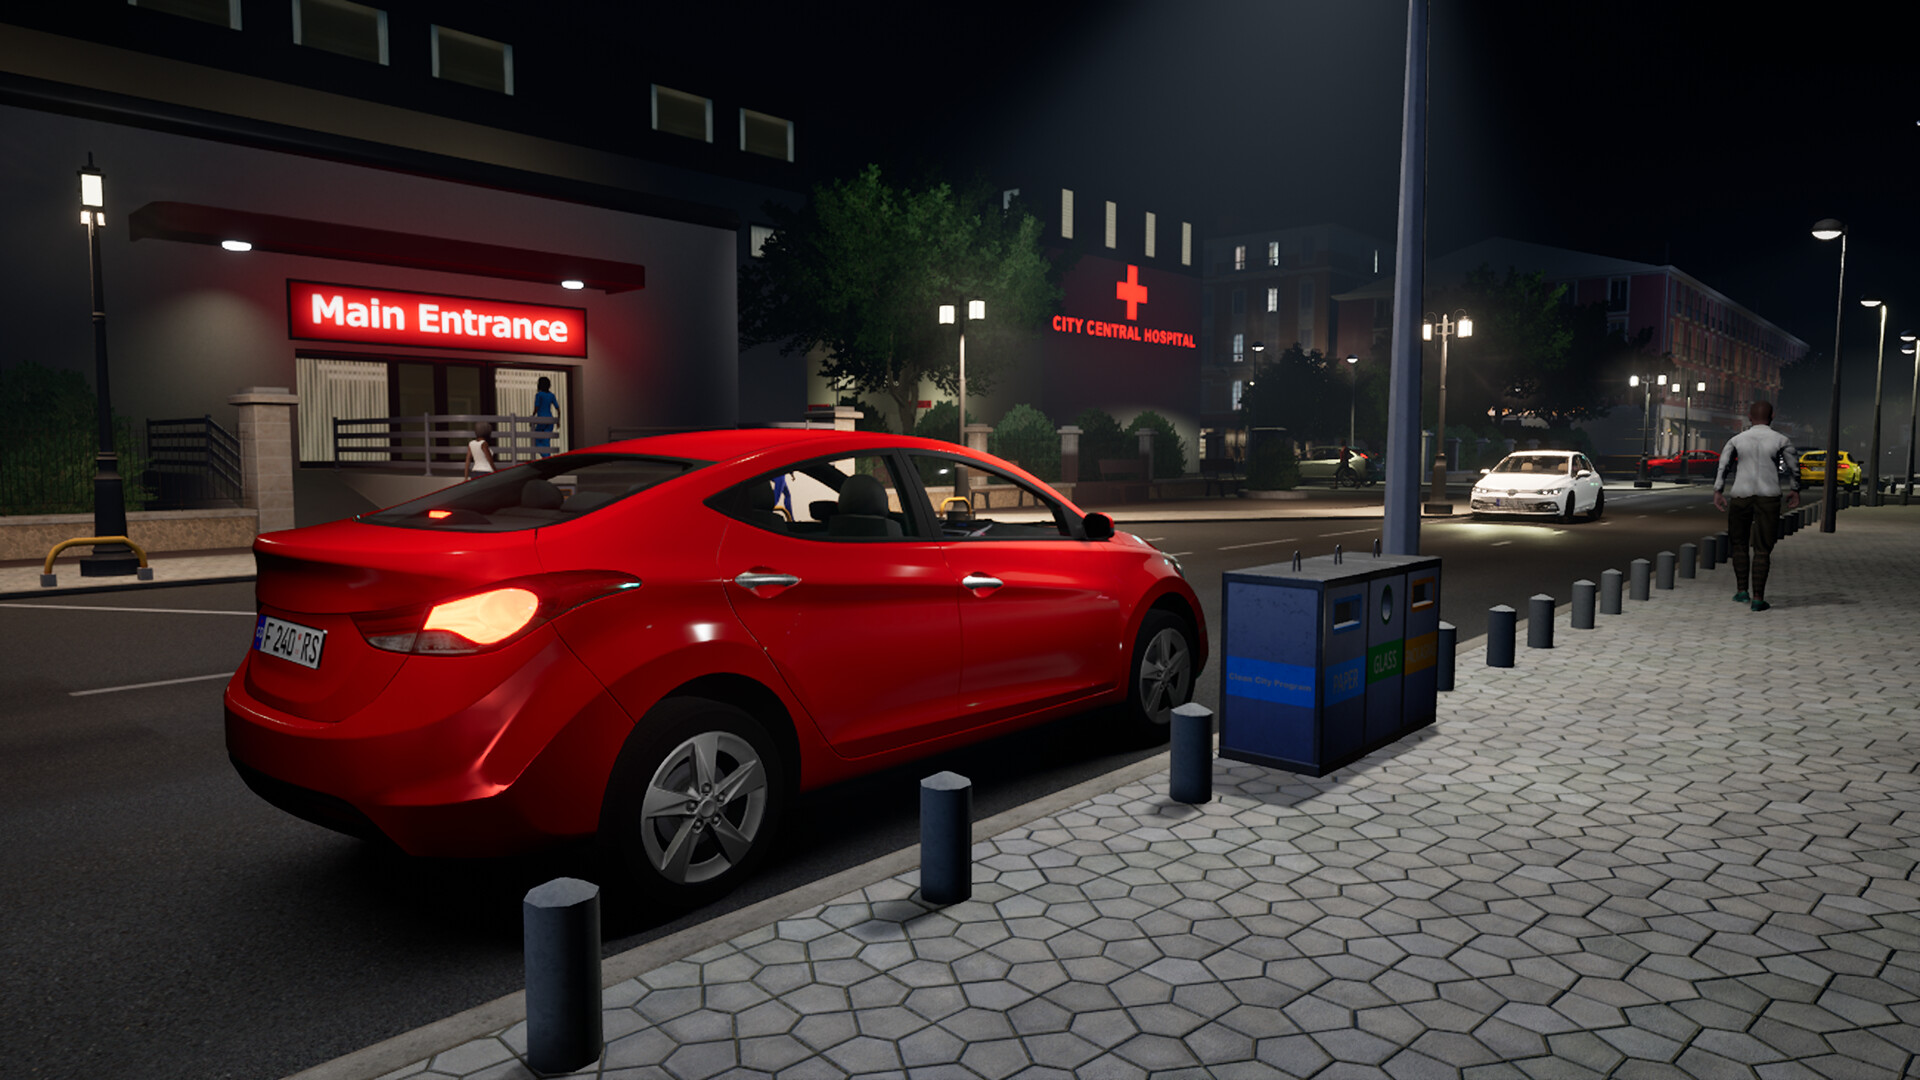 Multiplayer Driving Simulator MOD money 2.0.0 APK download free